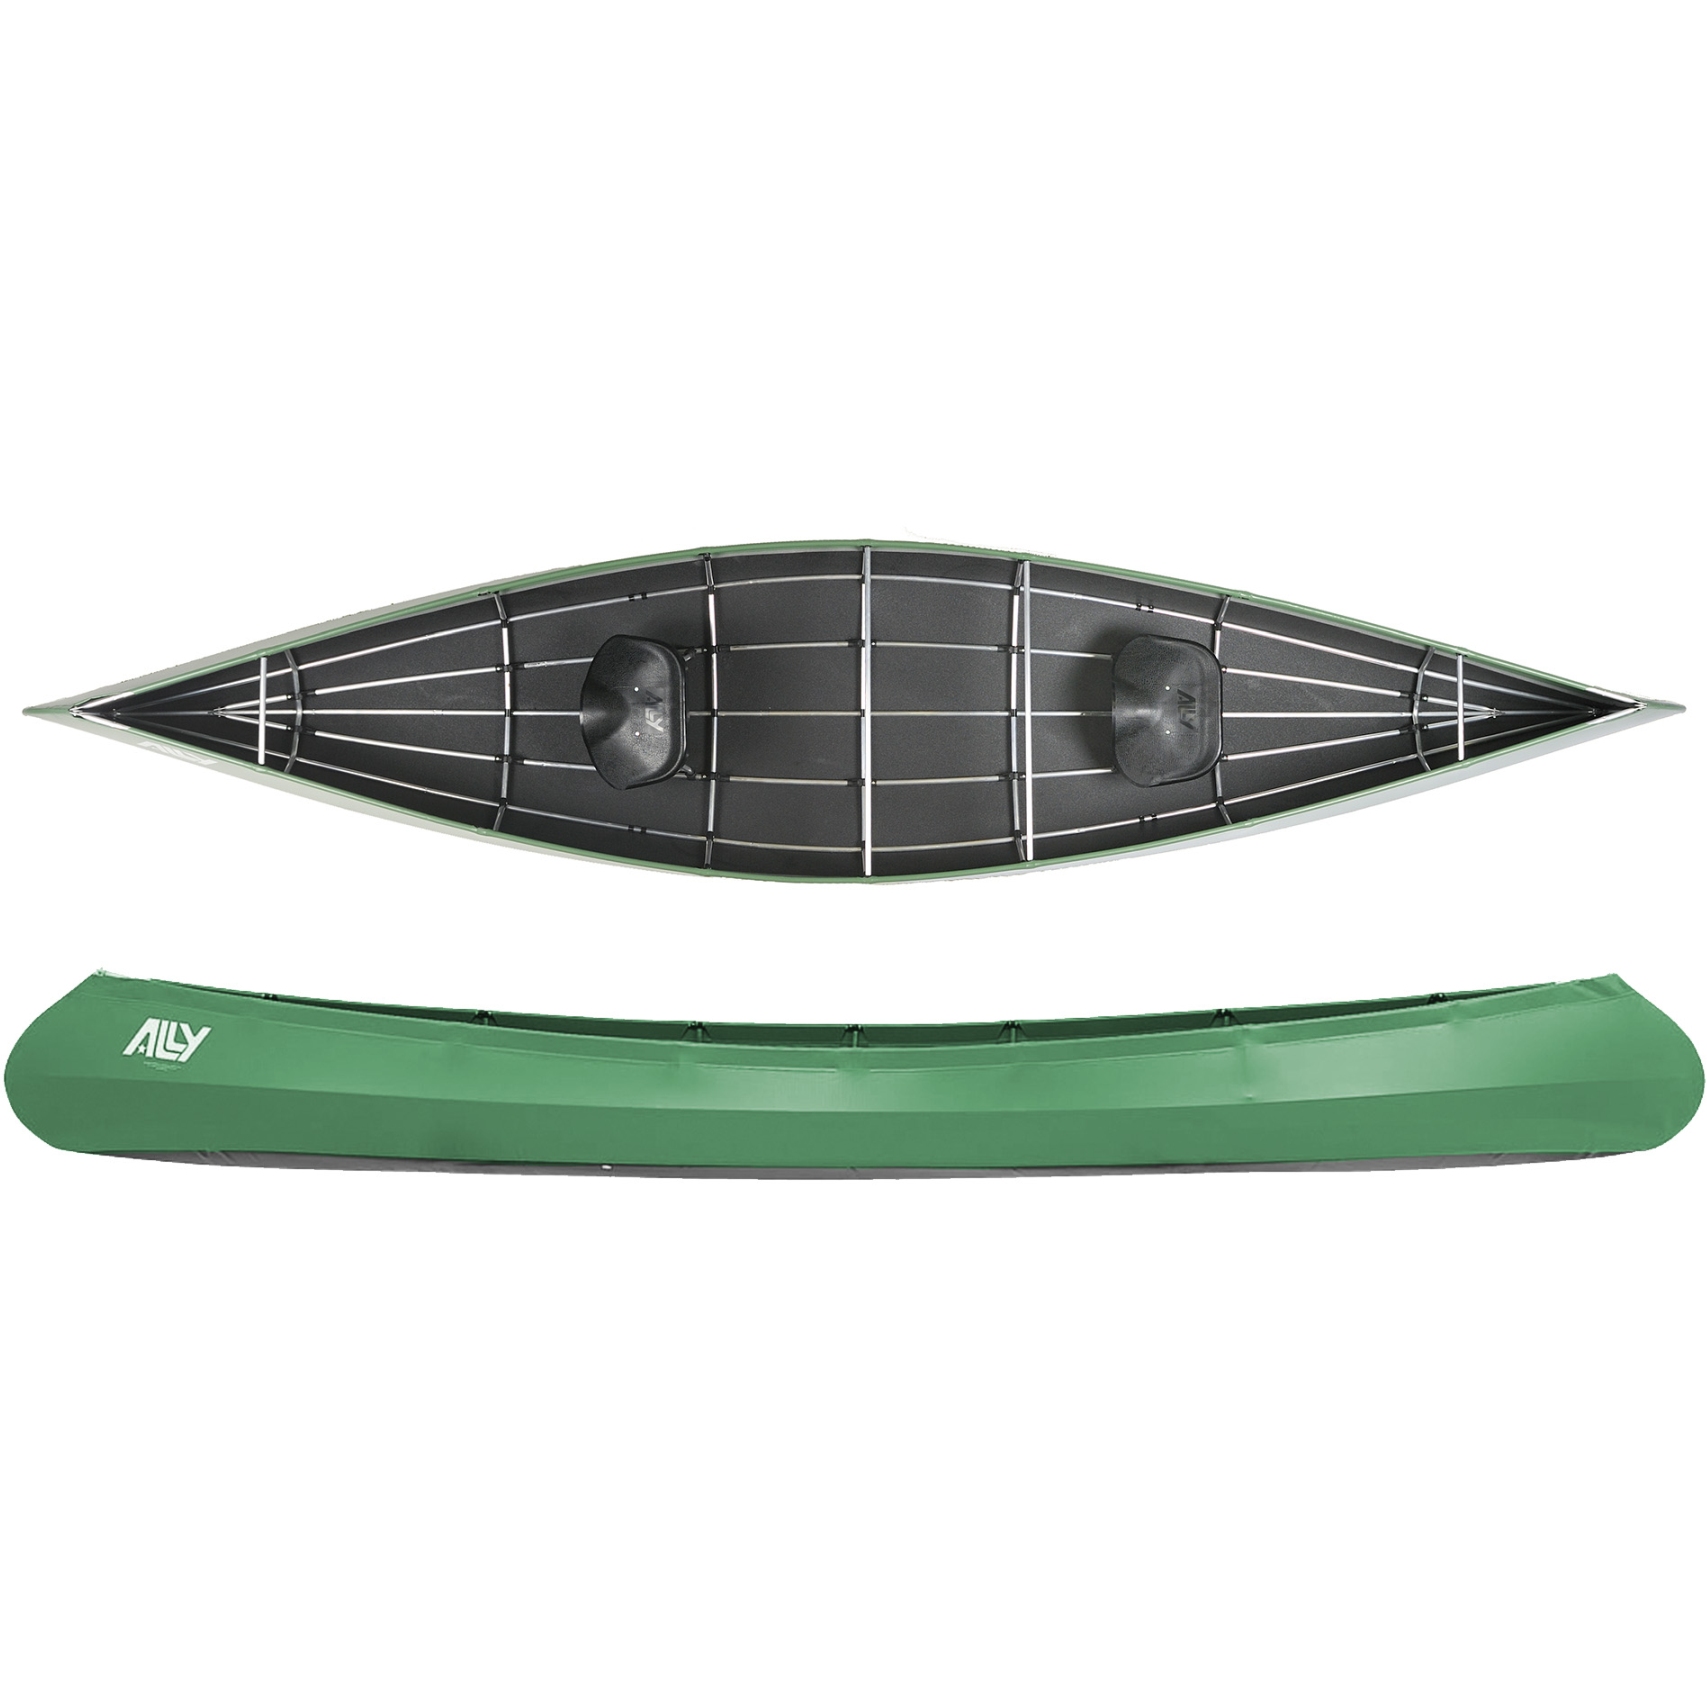 Productfoto van Bergans Ally 15 - Opvouwbare Kano - groen